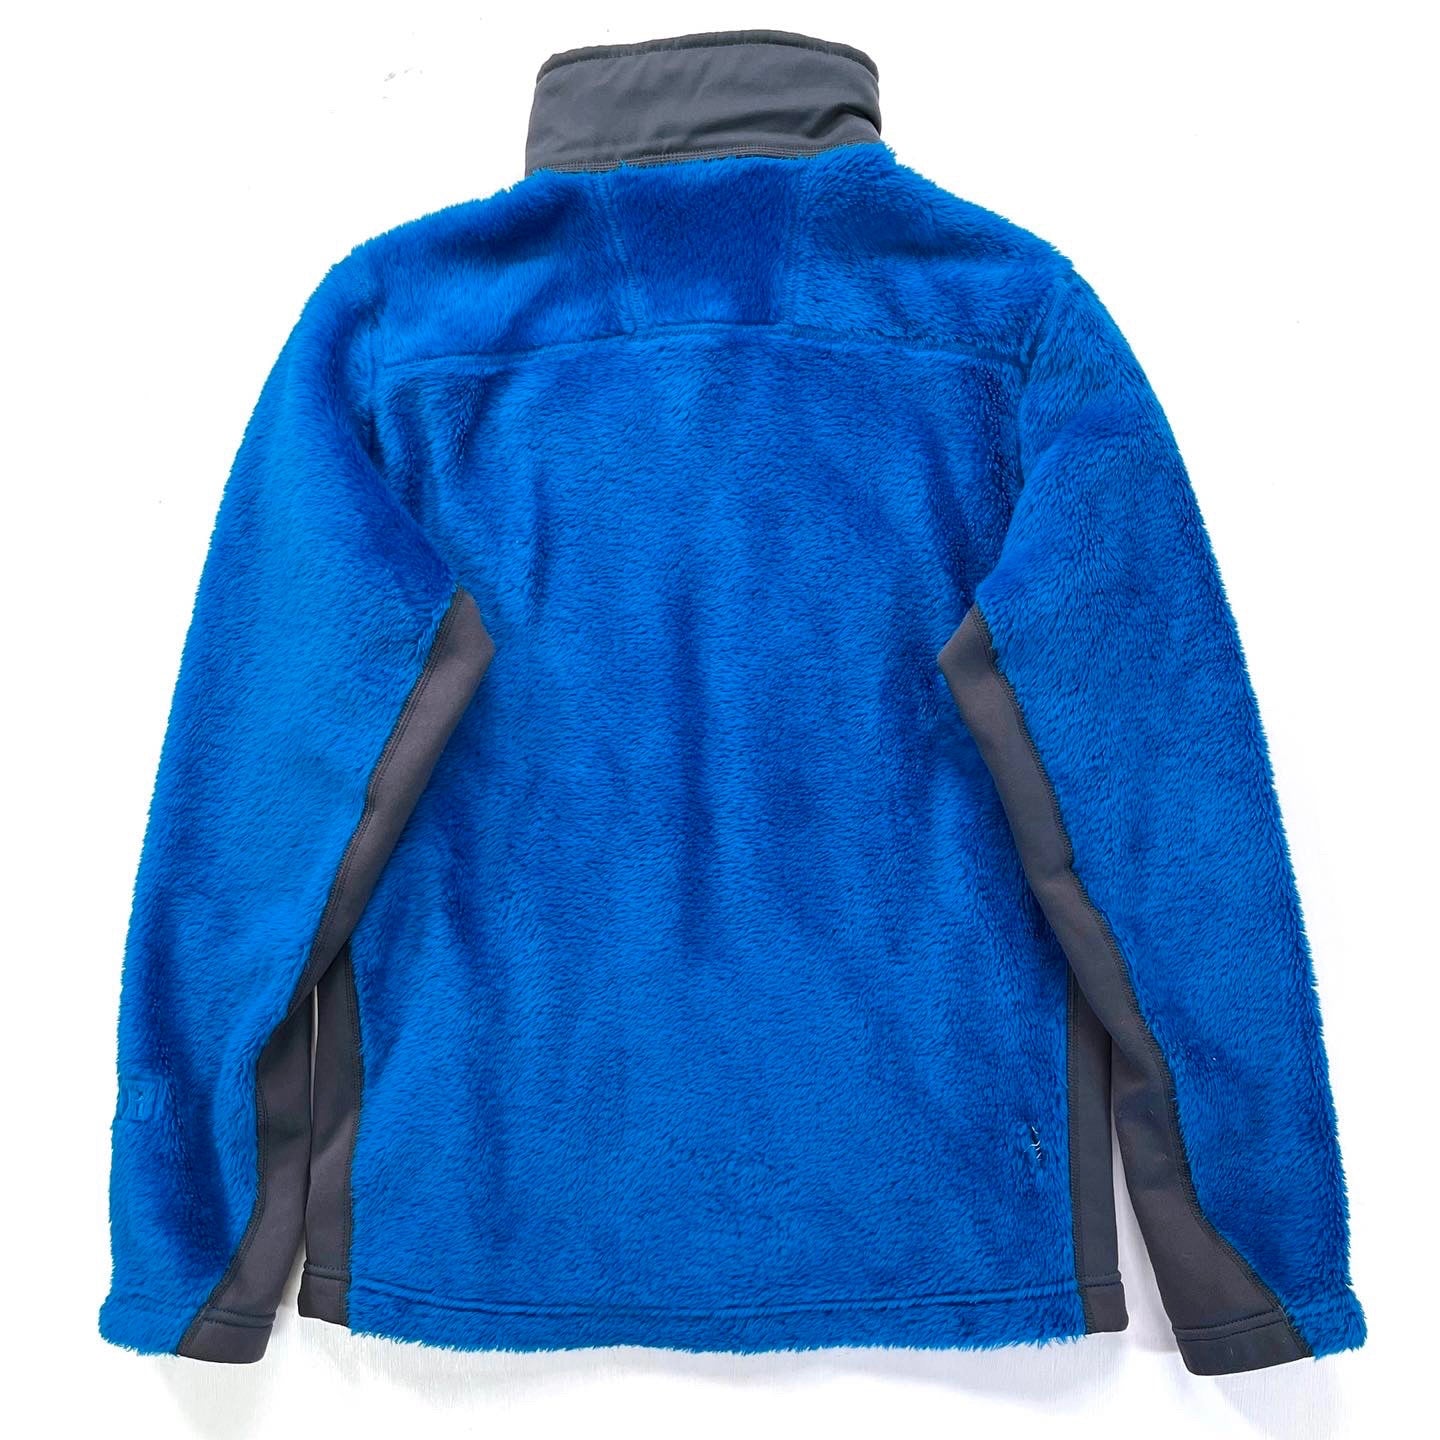 2010 Patagonia Men's R3® Hi-Loft Fleece Jacket, Bright Blue (S)